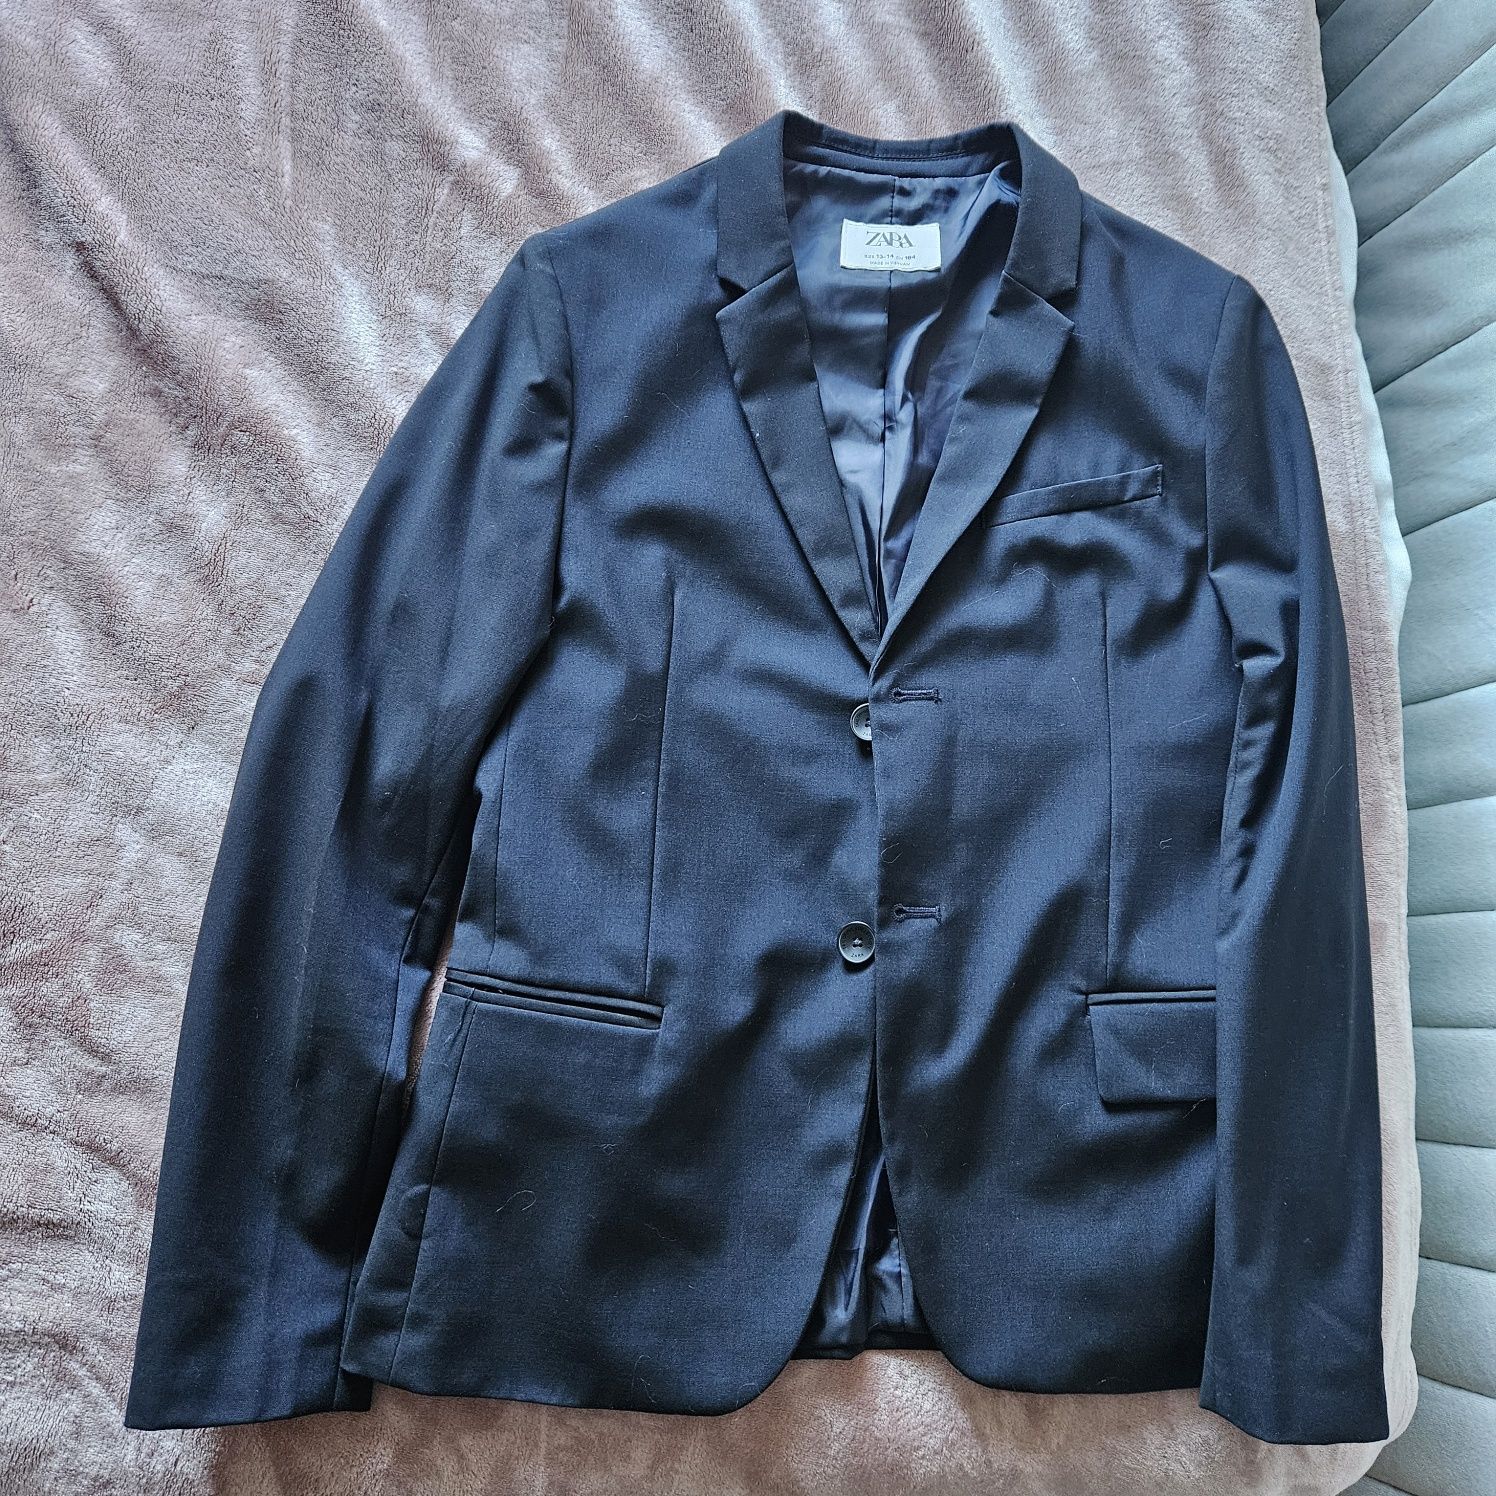 Garnitur Zara 164, ciemny granat  spodnie,  marynarka